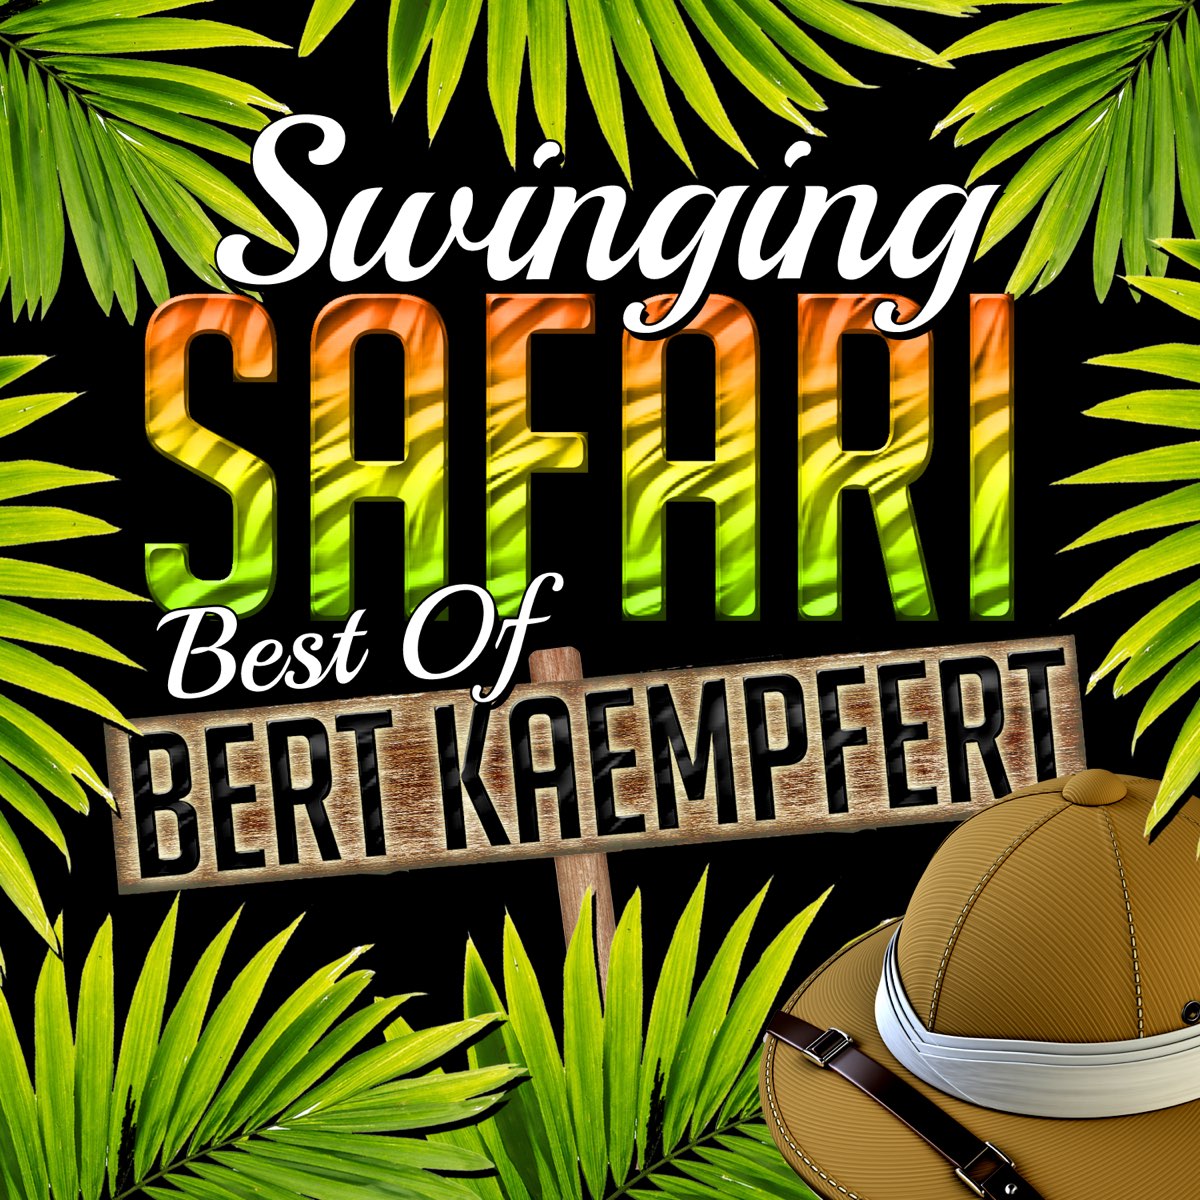 swingin safari music